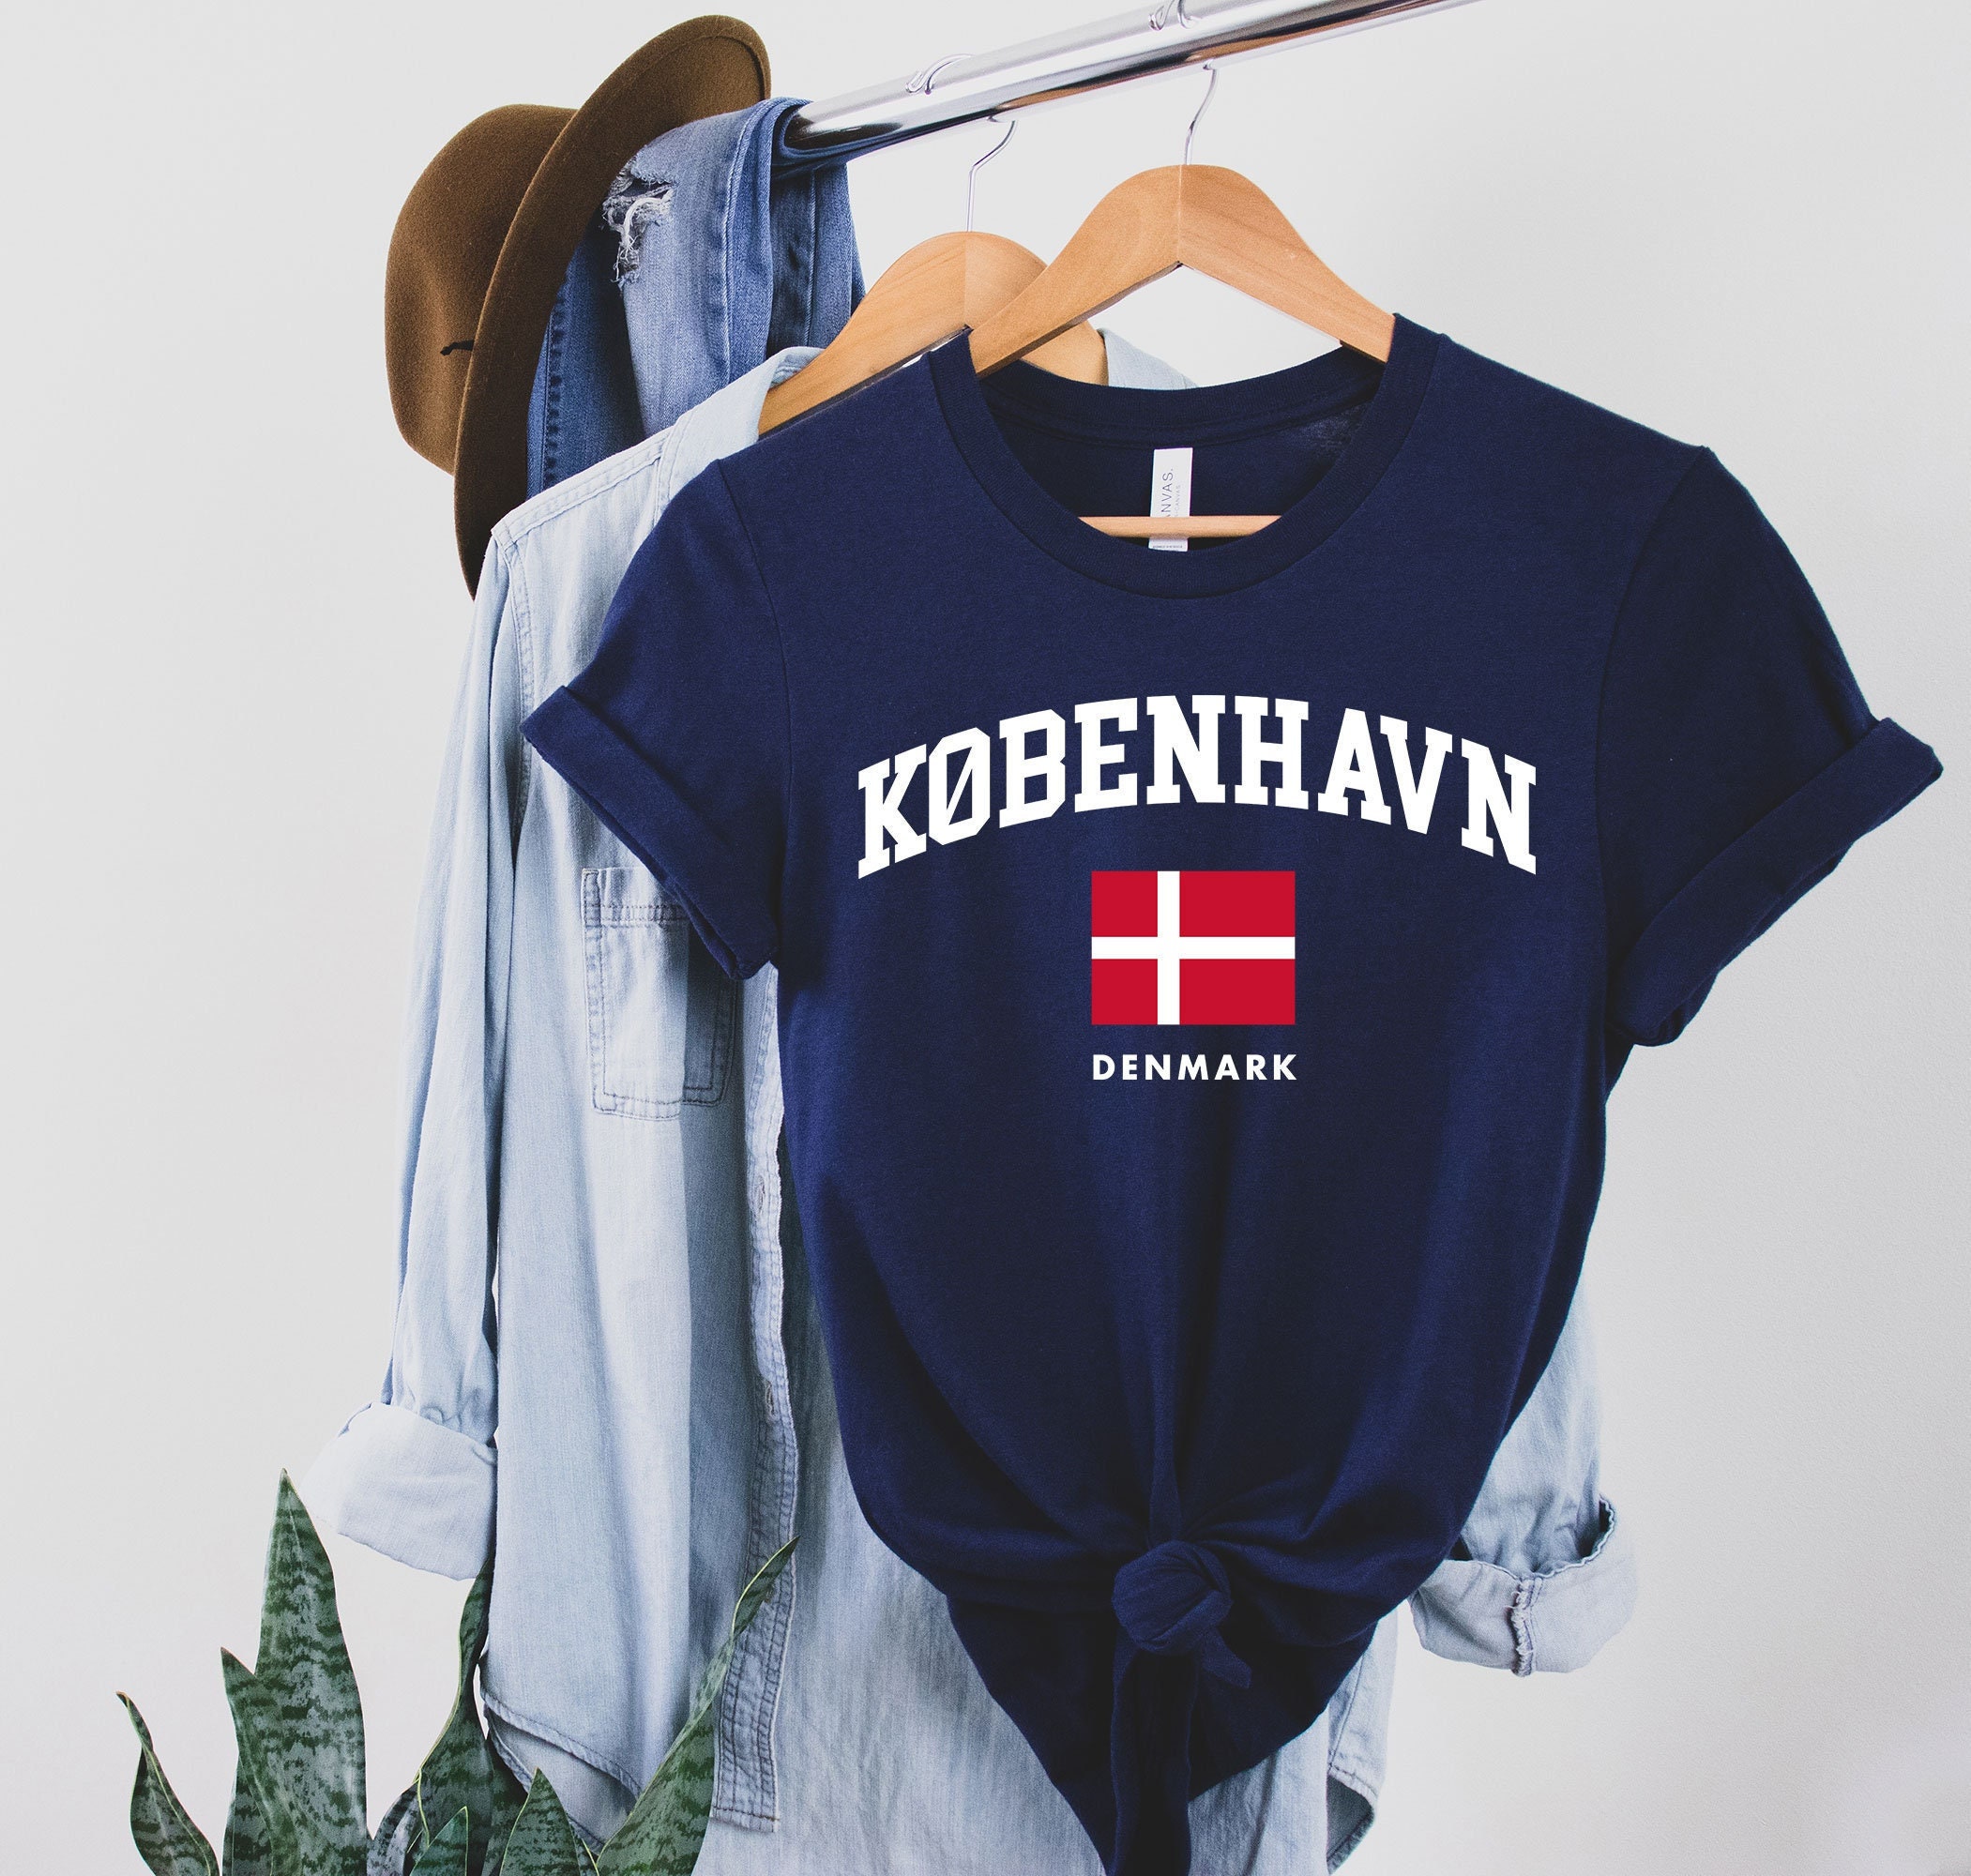 Discover Denmark shirt,Danish Shirts, Danish Tshirt, Danish Shirt